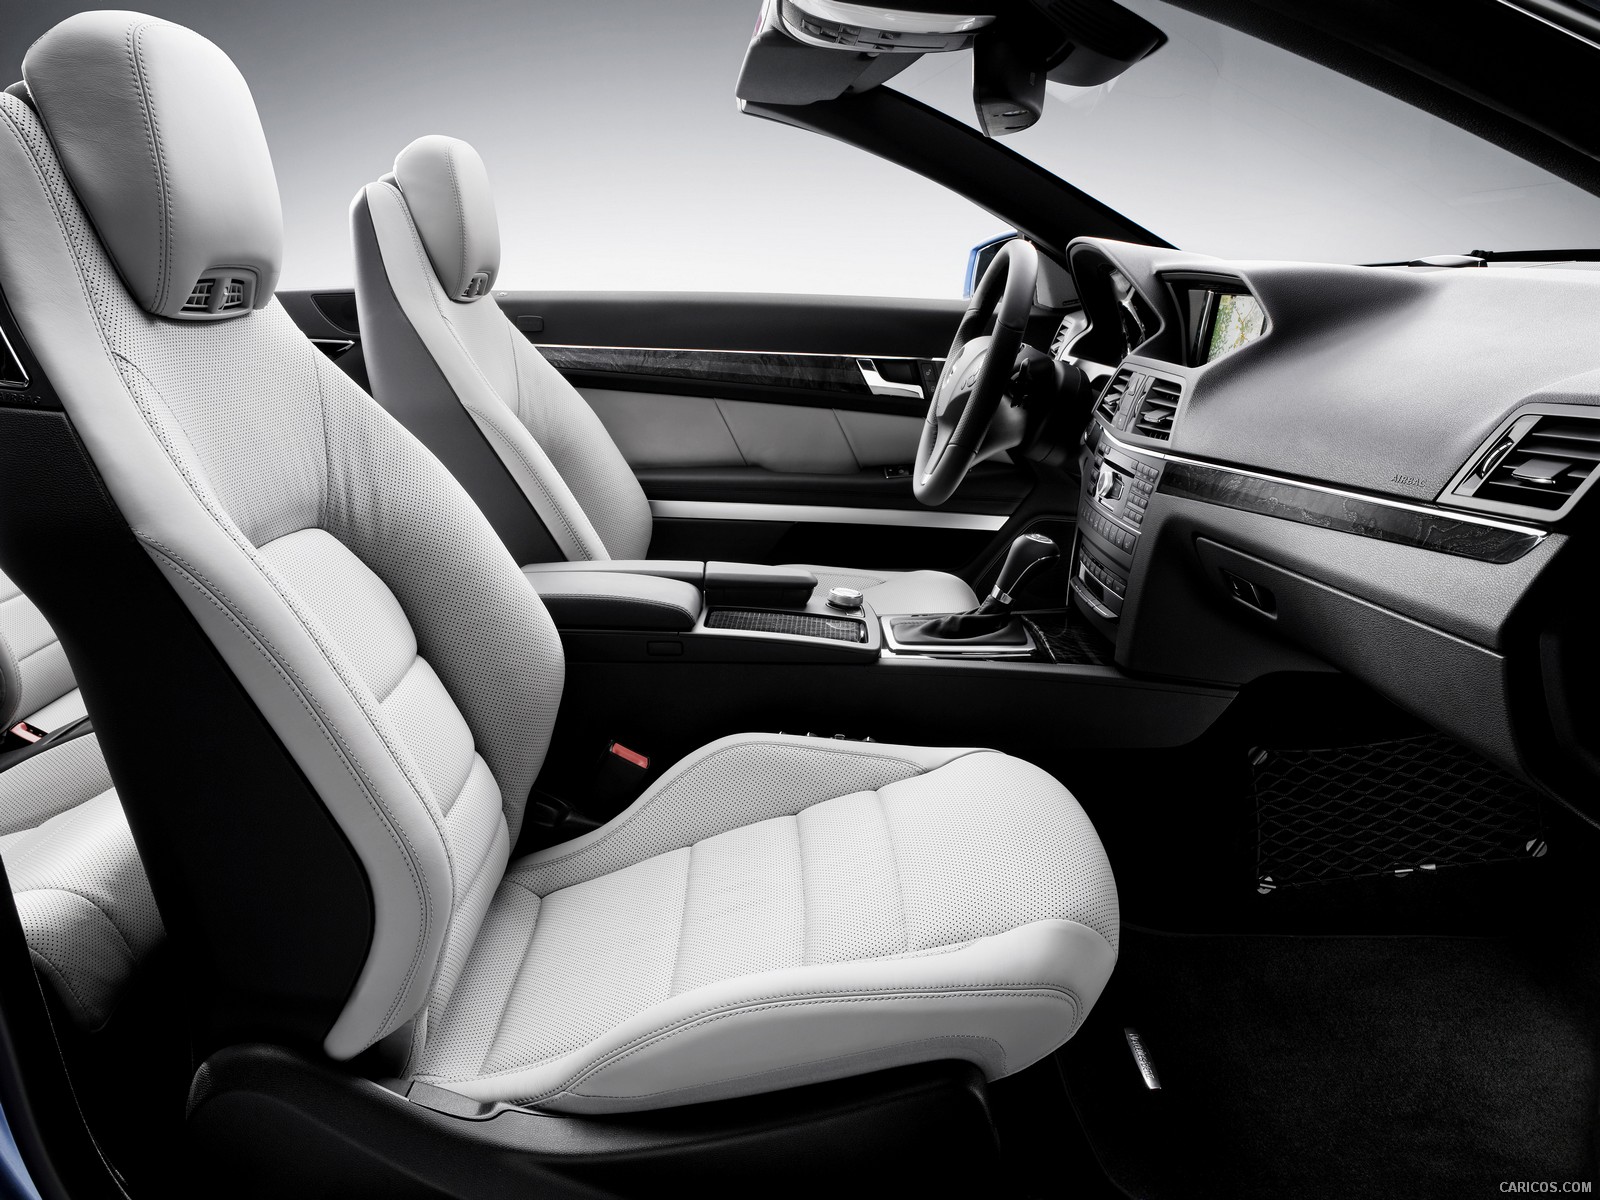 Mercedes-Benz E-Class Cabriolet  - Interior, Front Seats, #55 of 165